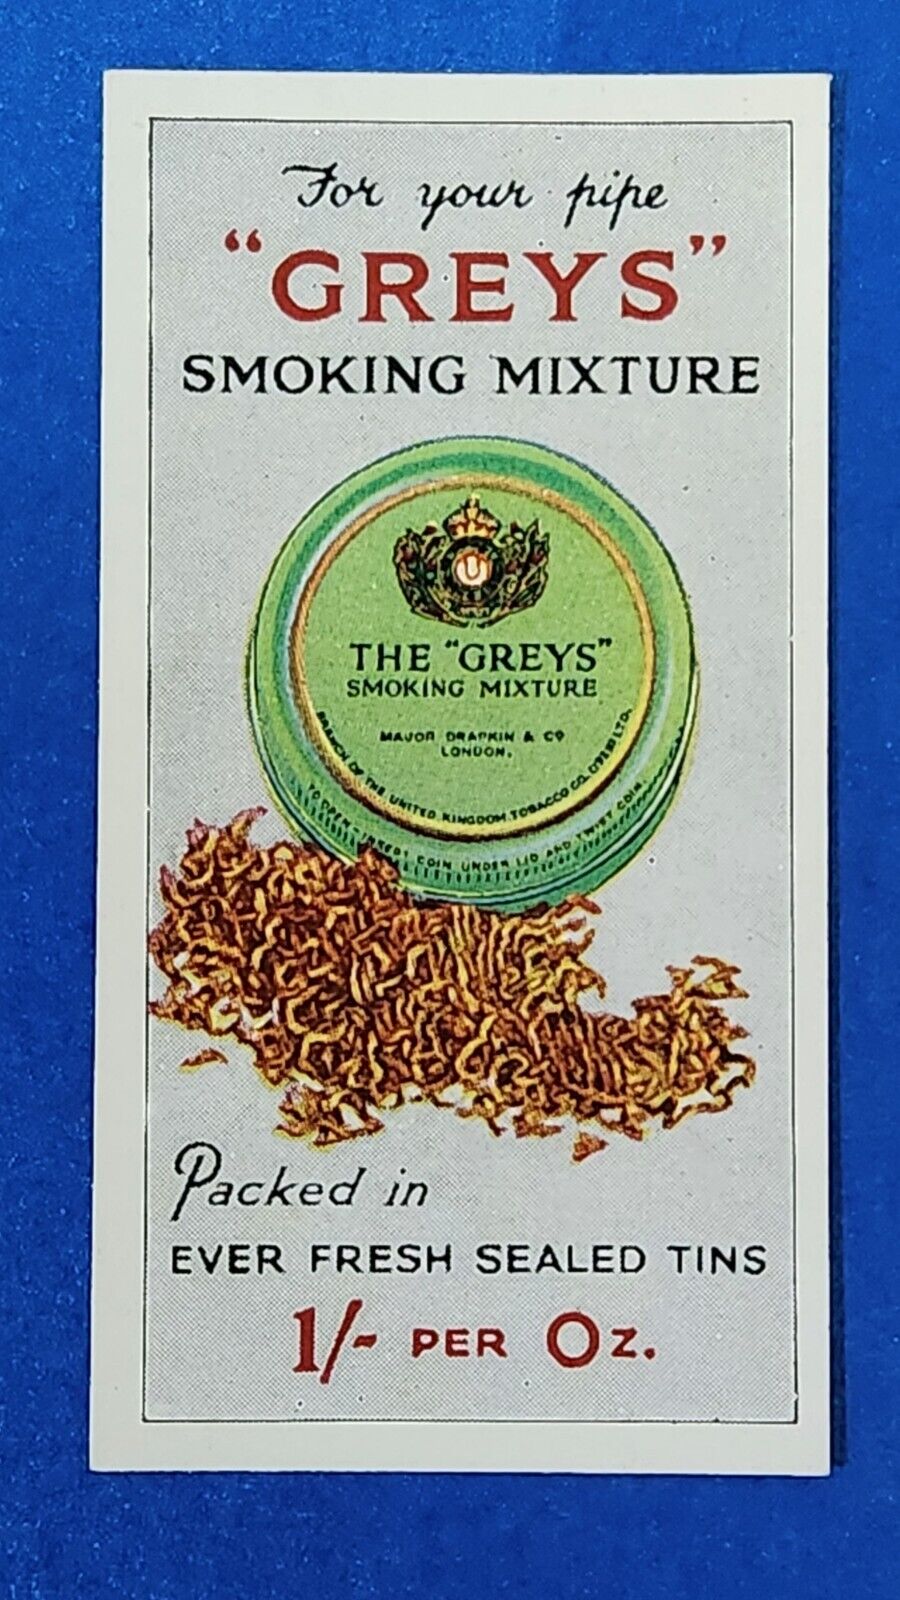 Major Drapkin Advertisment Cigarette Card, c1925 Greys Smoking Mixture A2X